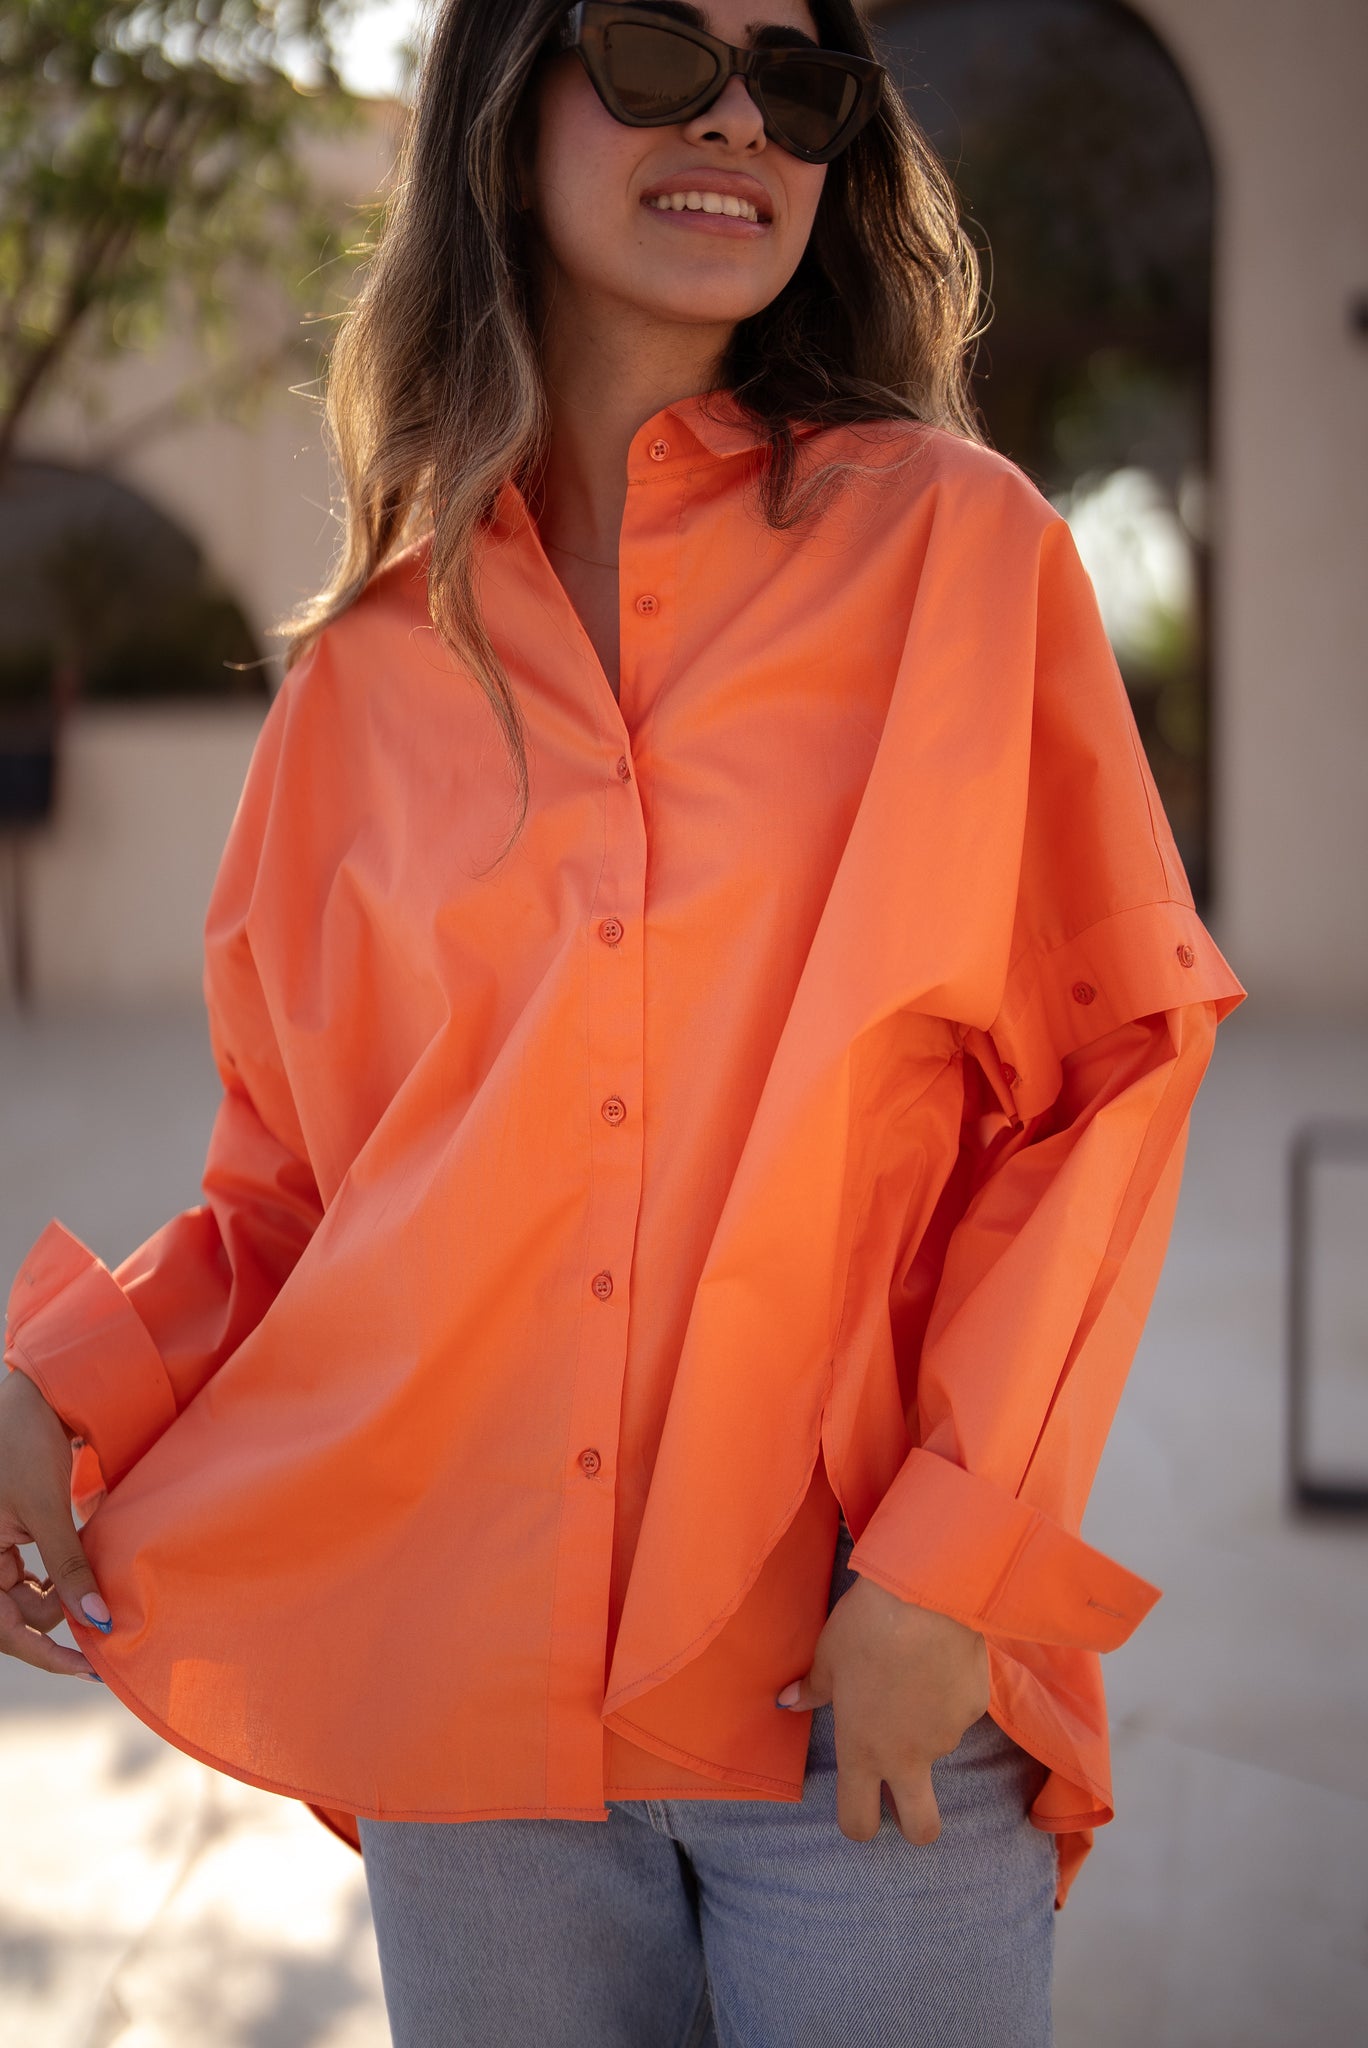 Not-so-average shirt in Orange